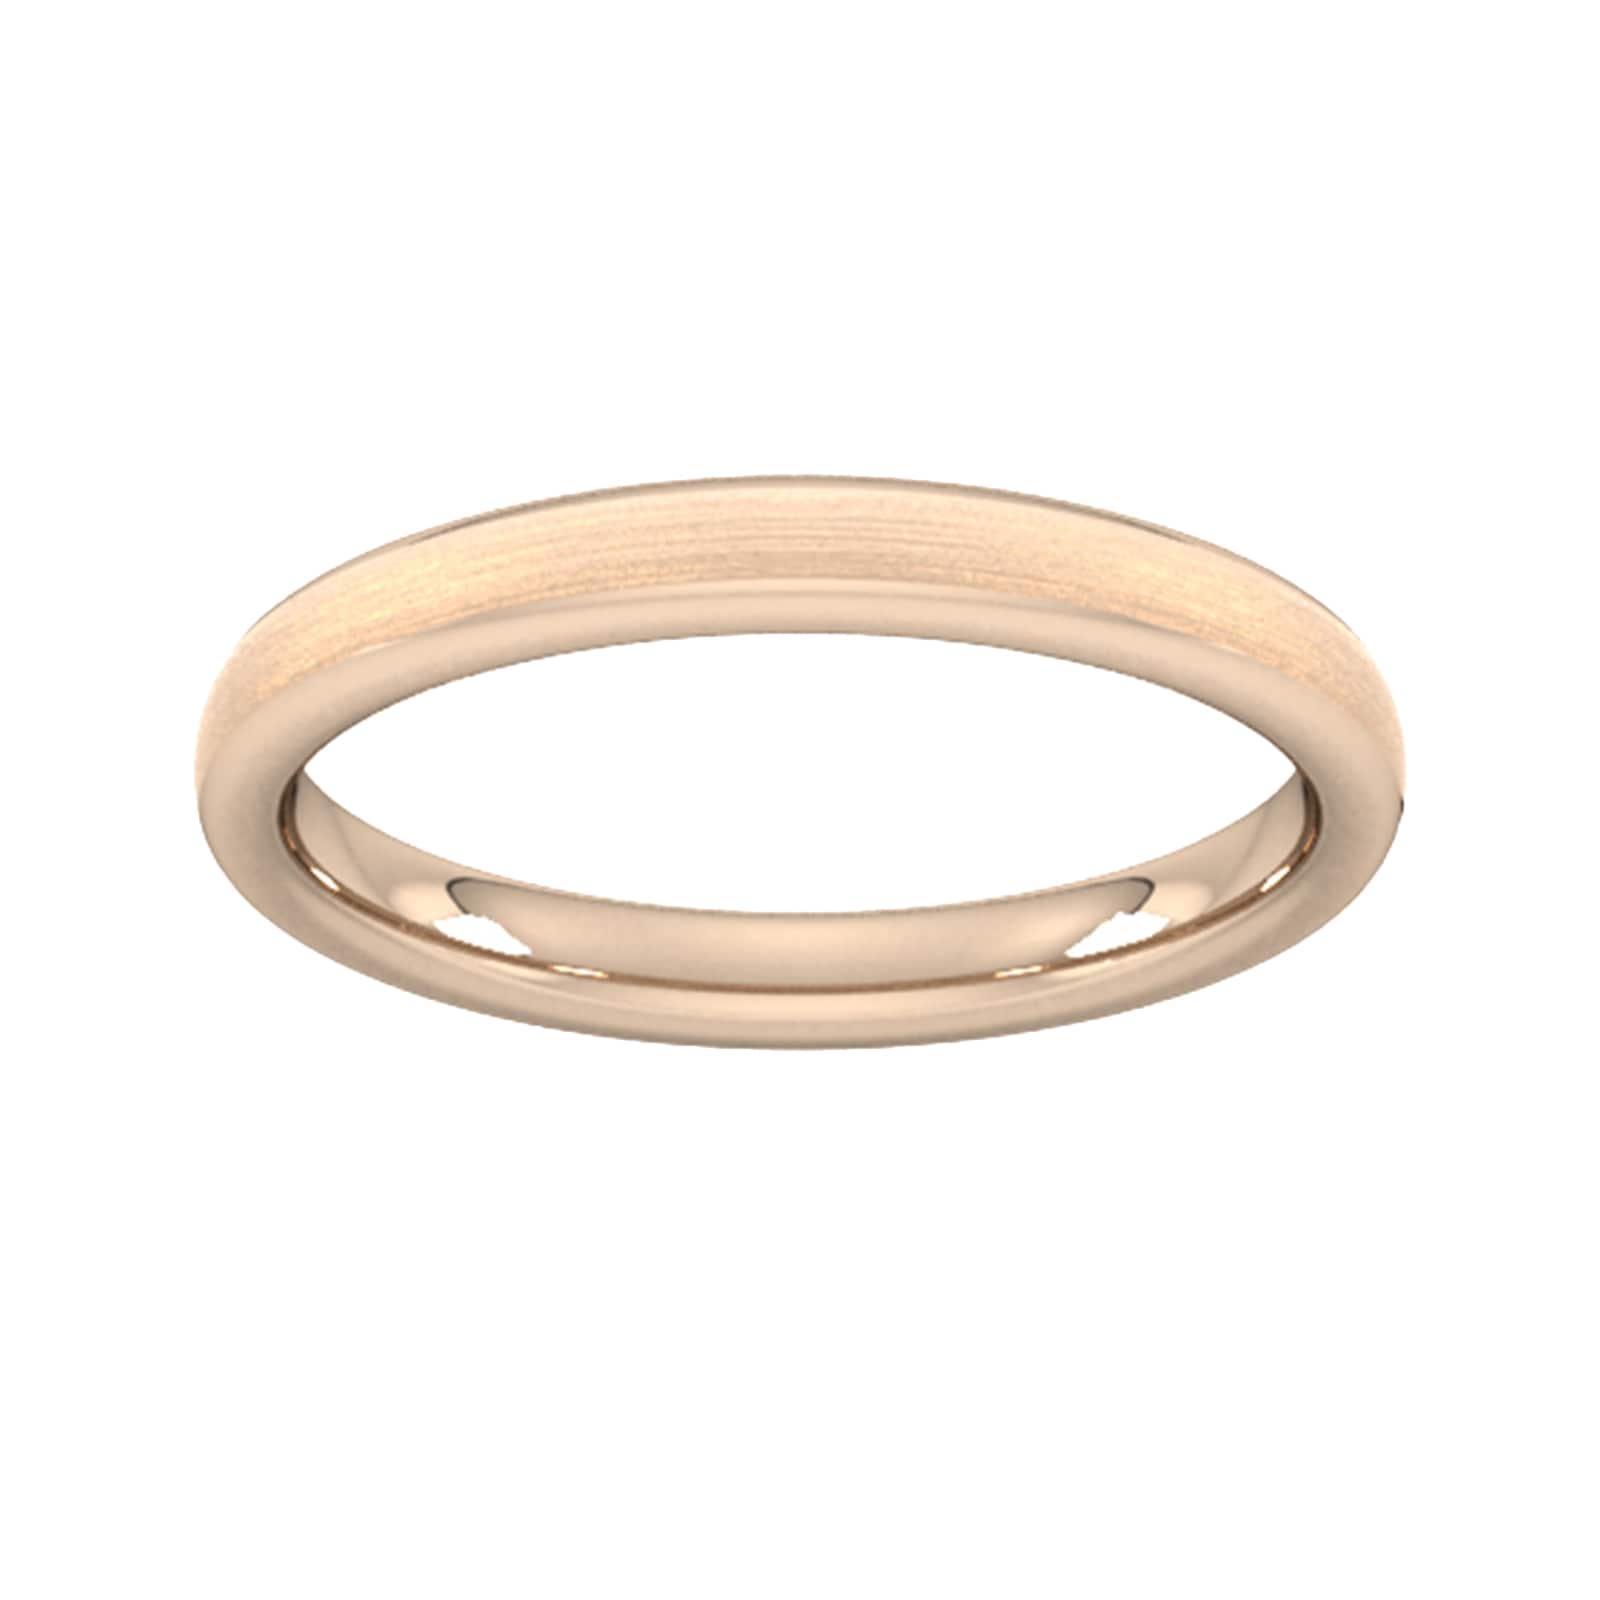 2.5mm Slight Court Heavy Matt Finished Wedding Ring In 9 Carat Rose Gold - Ring Size W